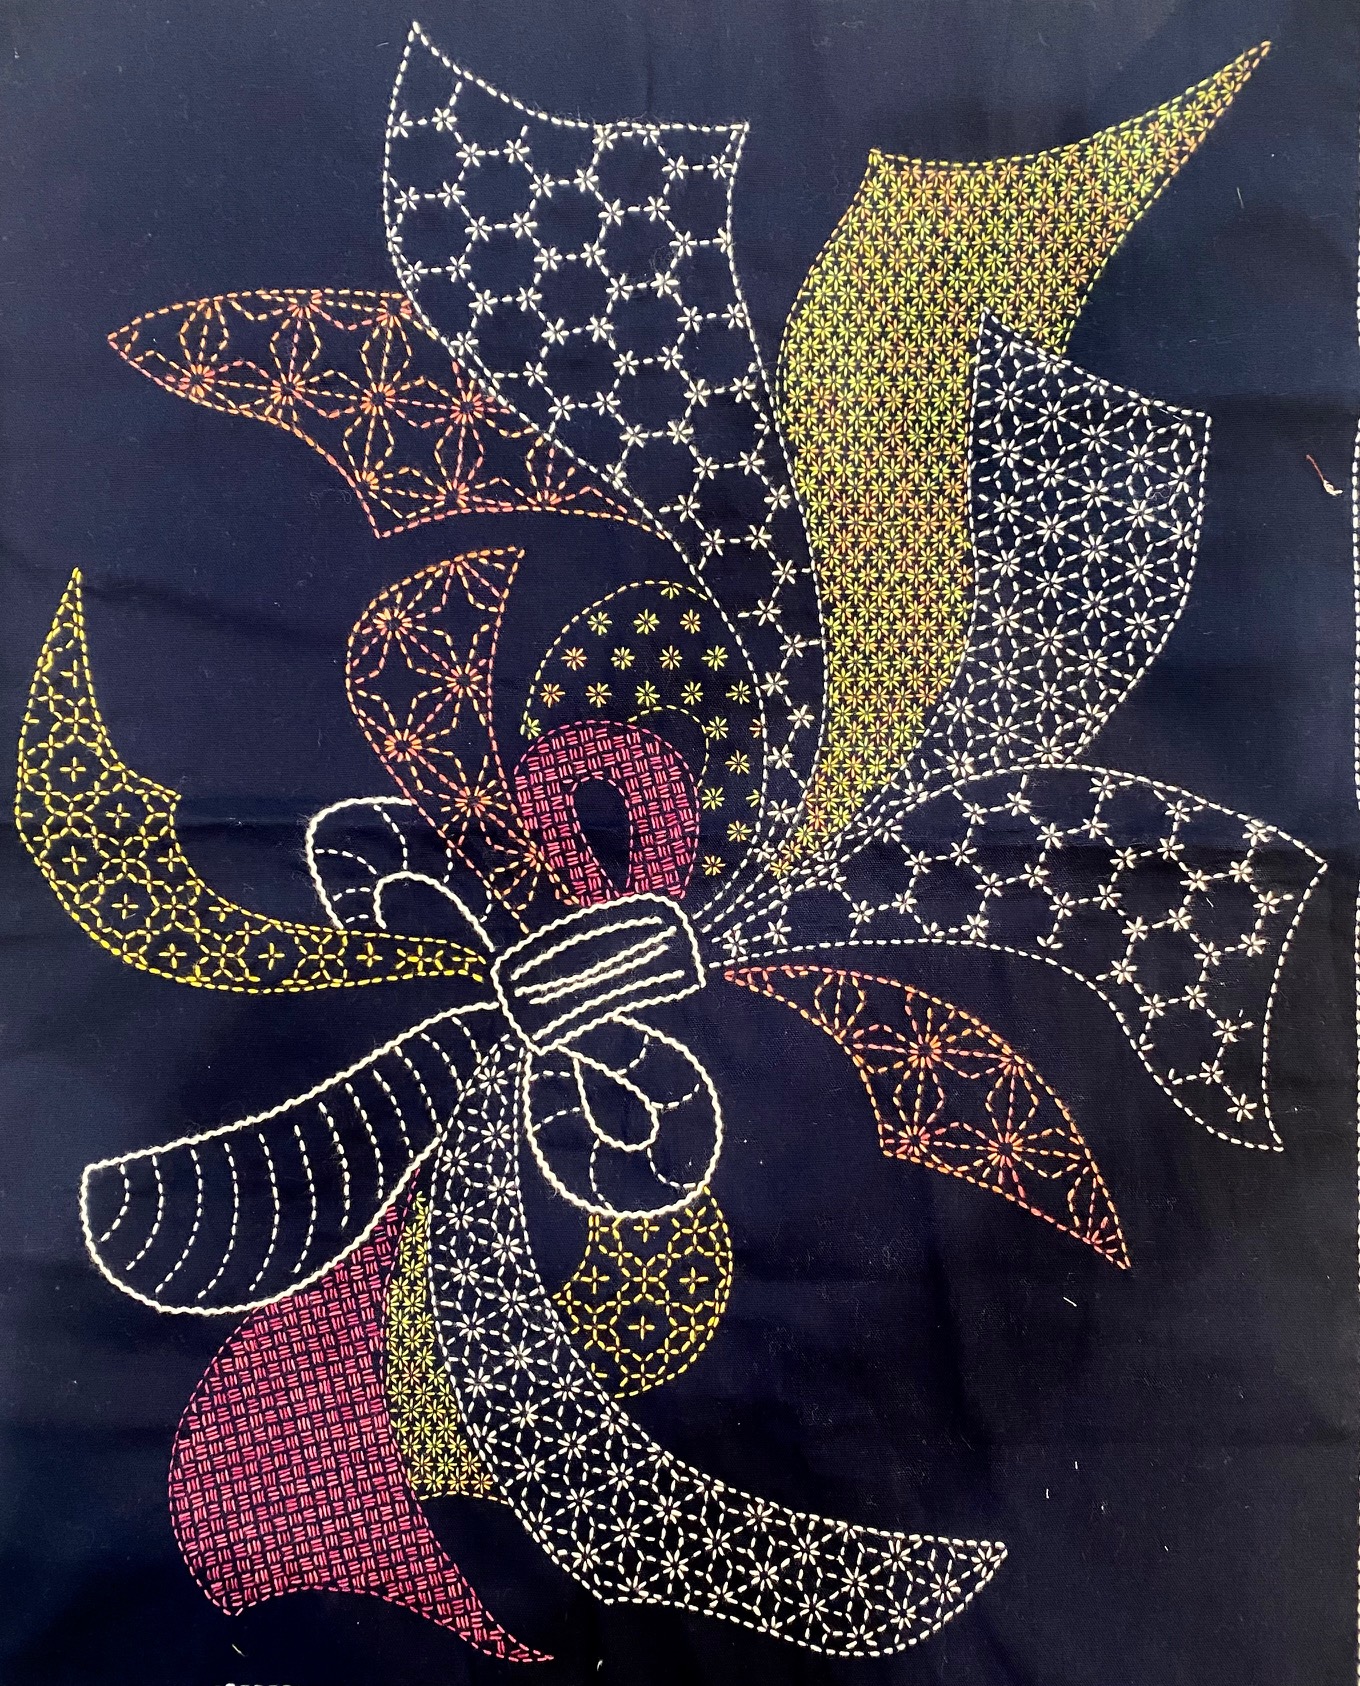 Sashiko fabric panel with eight patterns, indigo blue